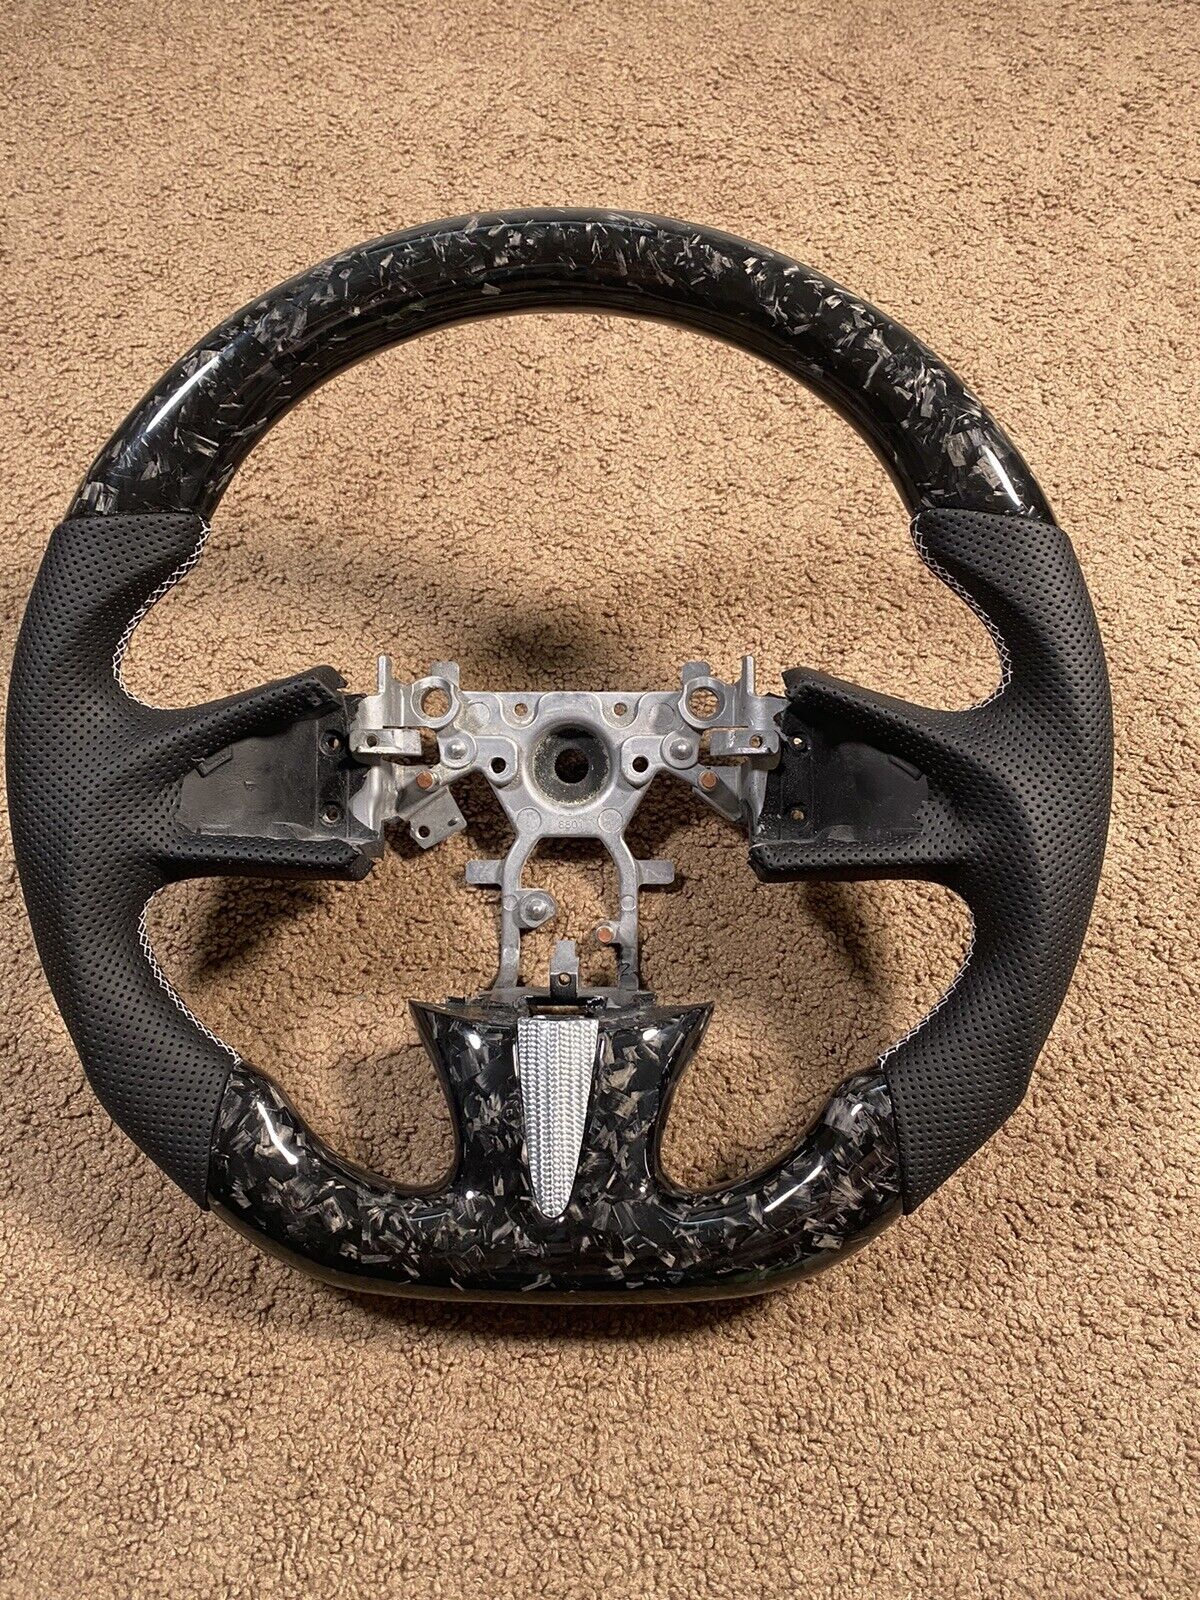 Steering Wheel INFINITI Q50 Q60 2014-2018 Real Carbon Fiber